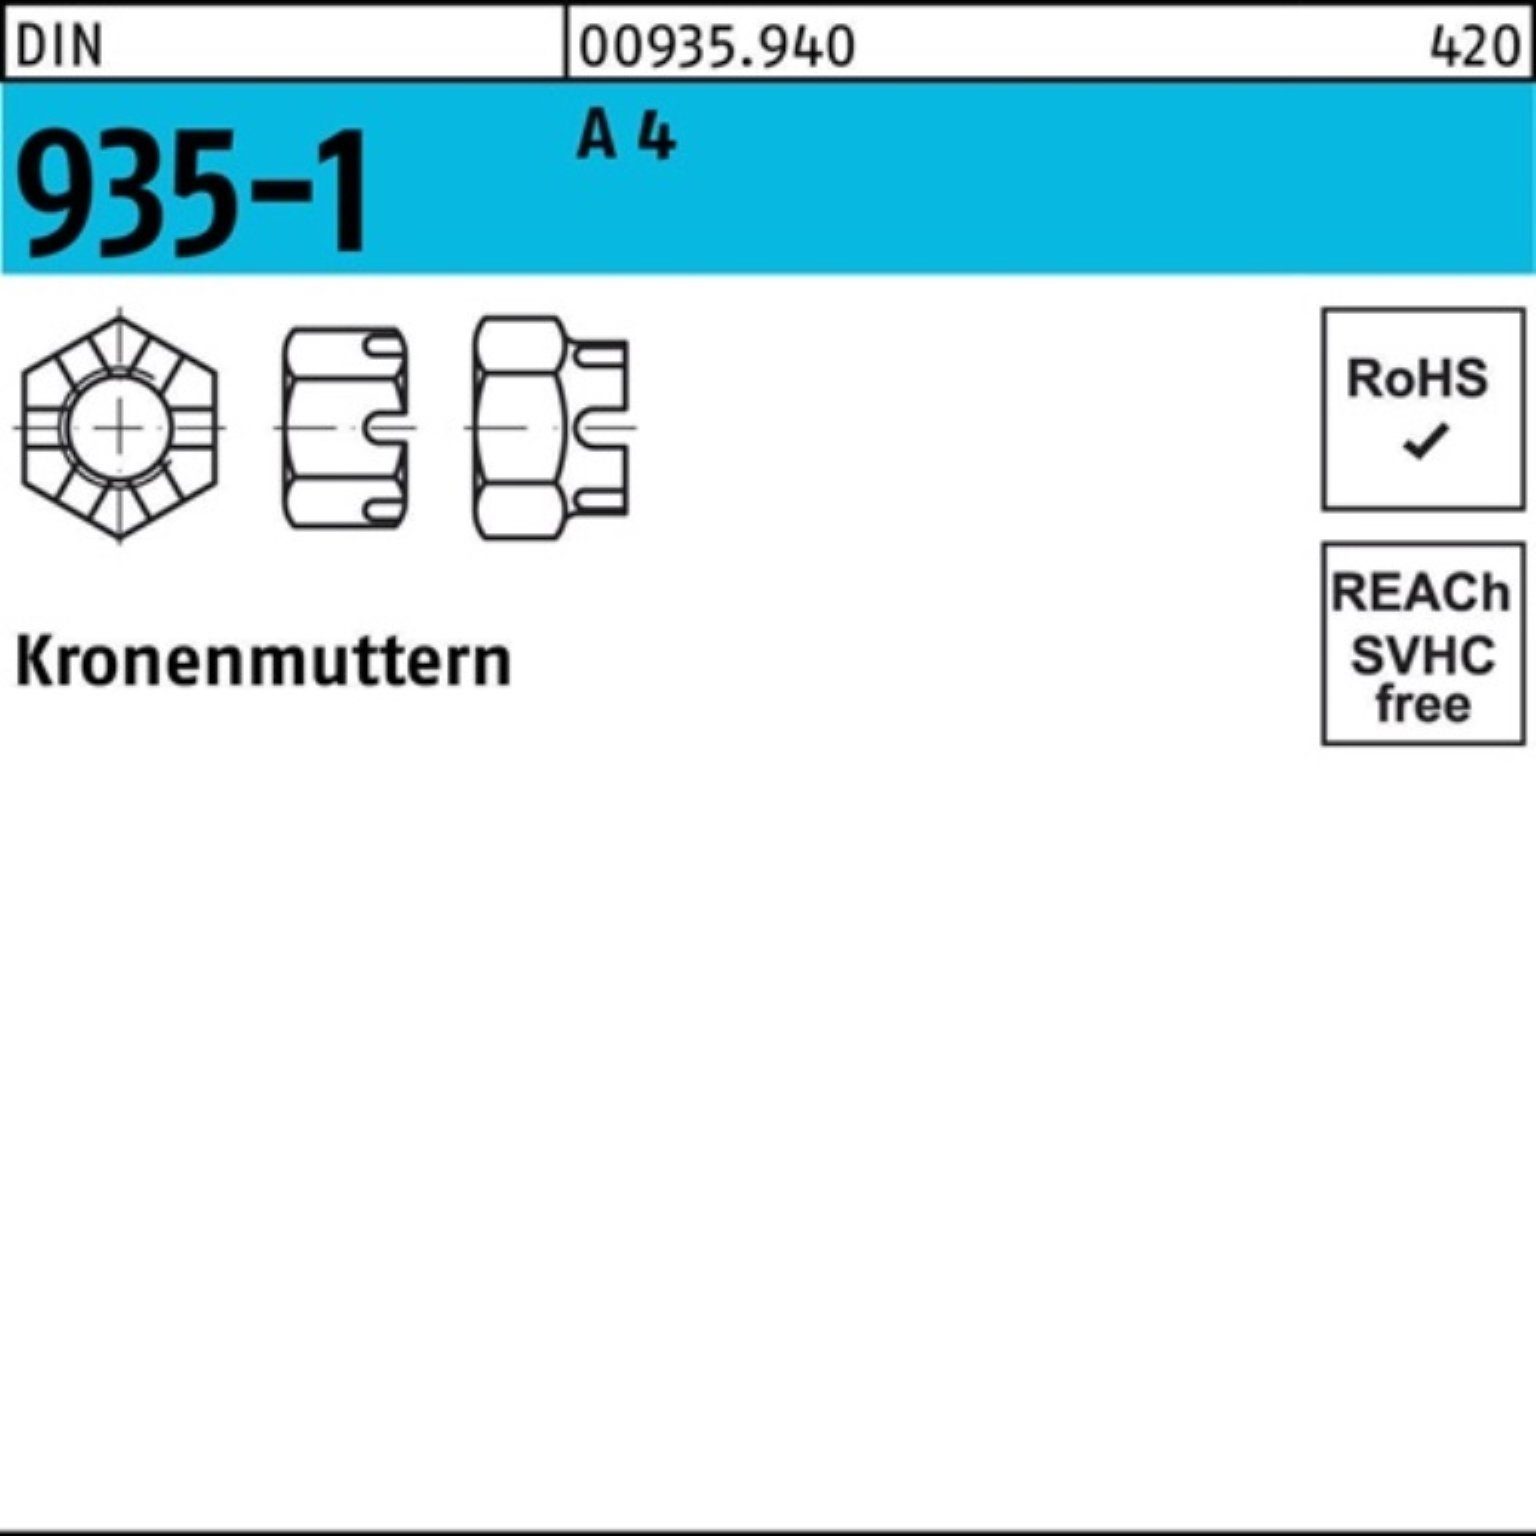 Reyher Kronenmutter 100er Pack Kronenmutter DIN 935-1 M16 A 4 1 Stück DIN 935-1 A 4 Krone